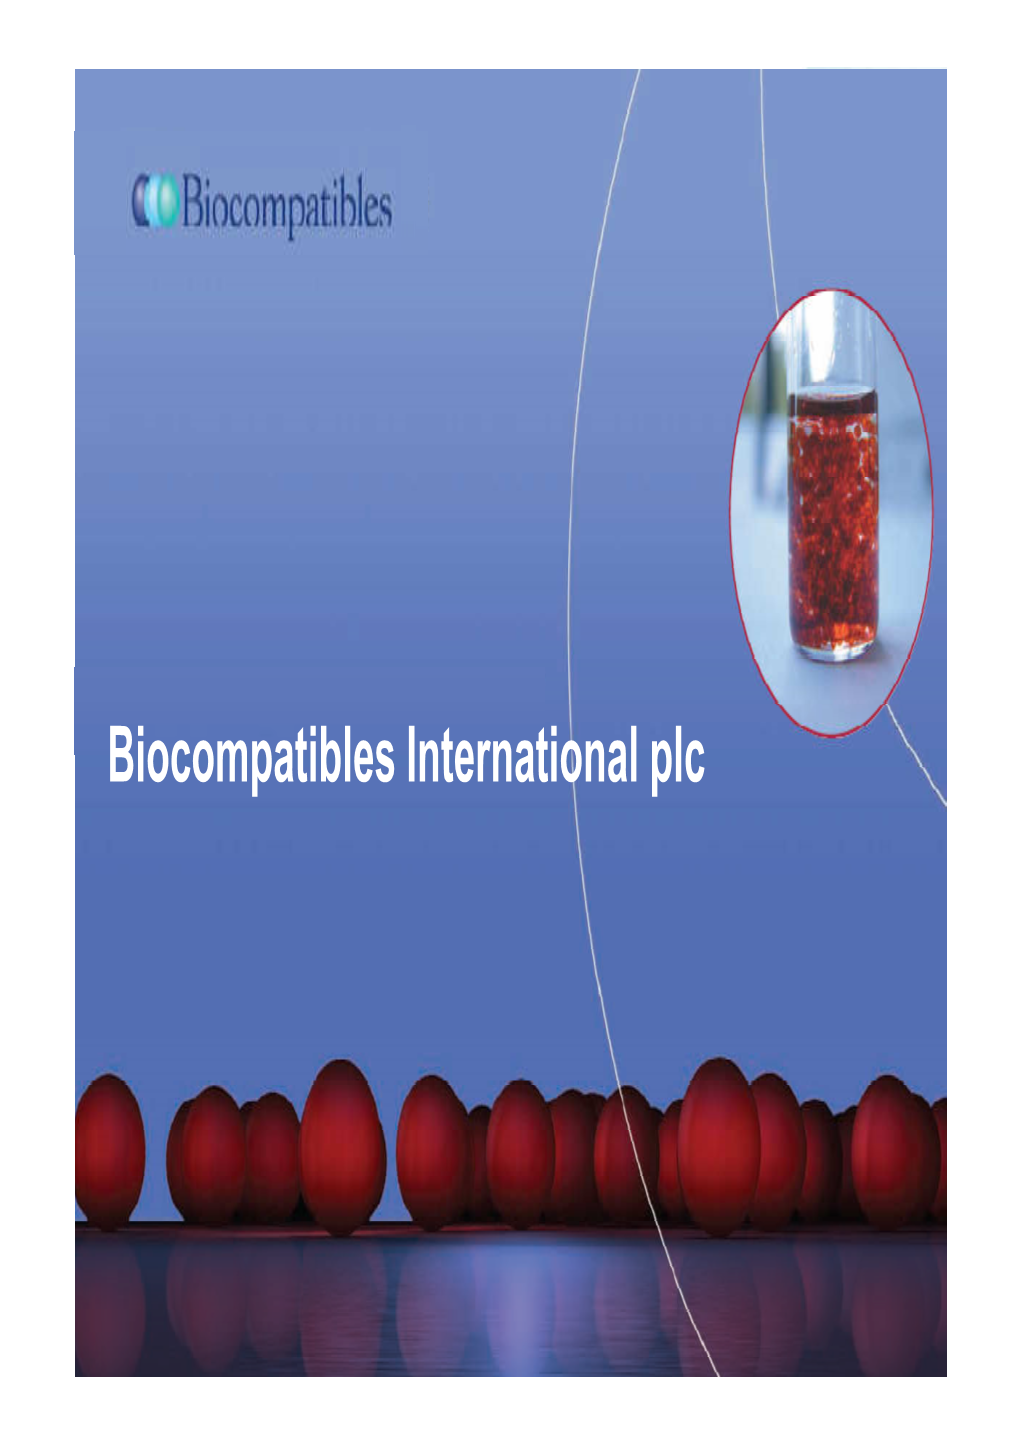 Biocompatibles Presentation 20091203